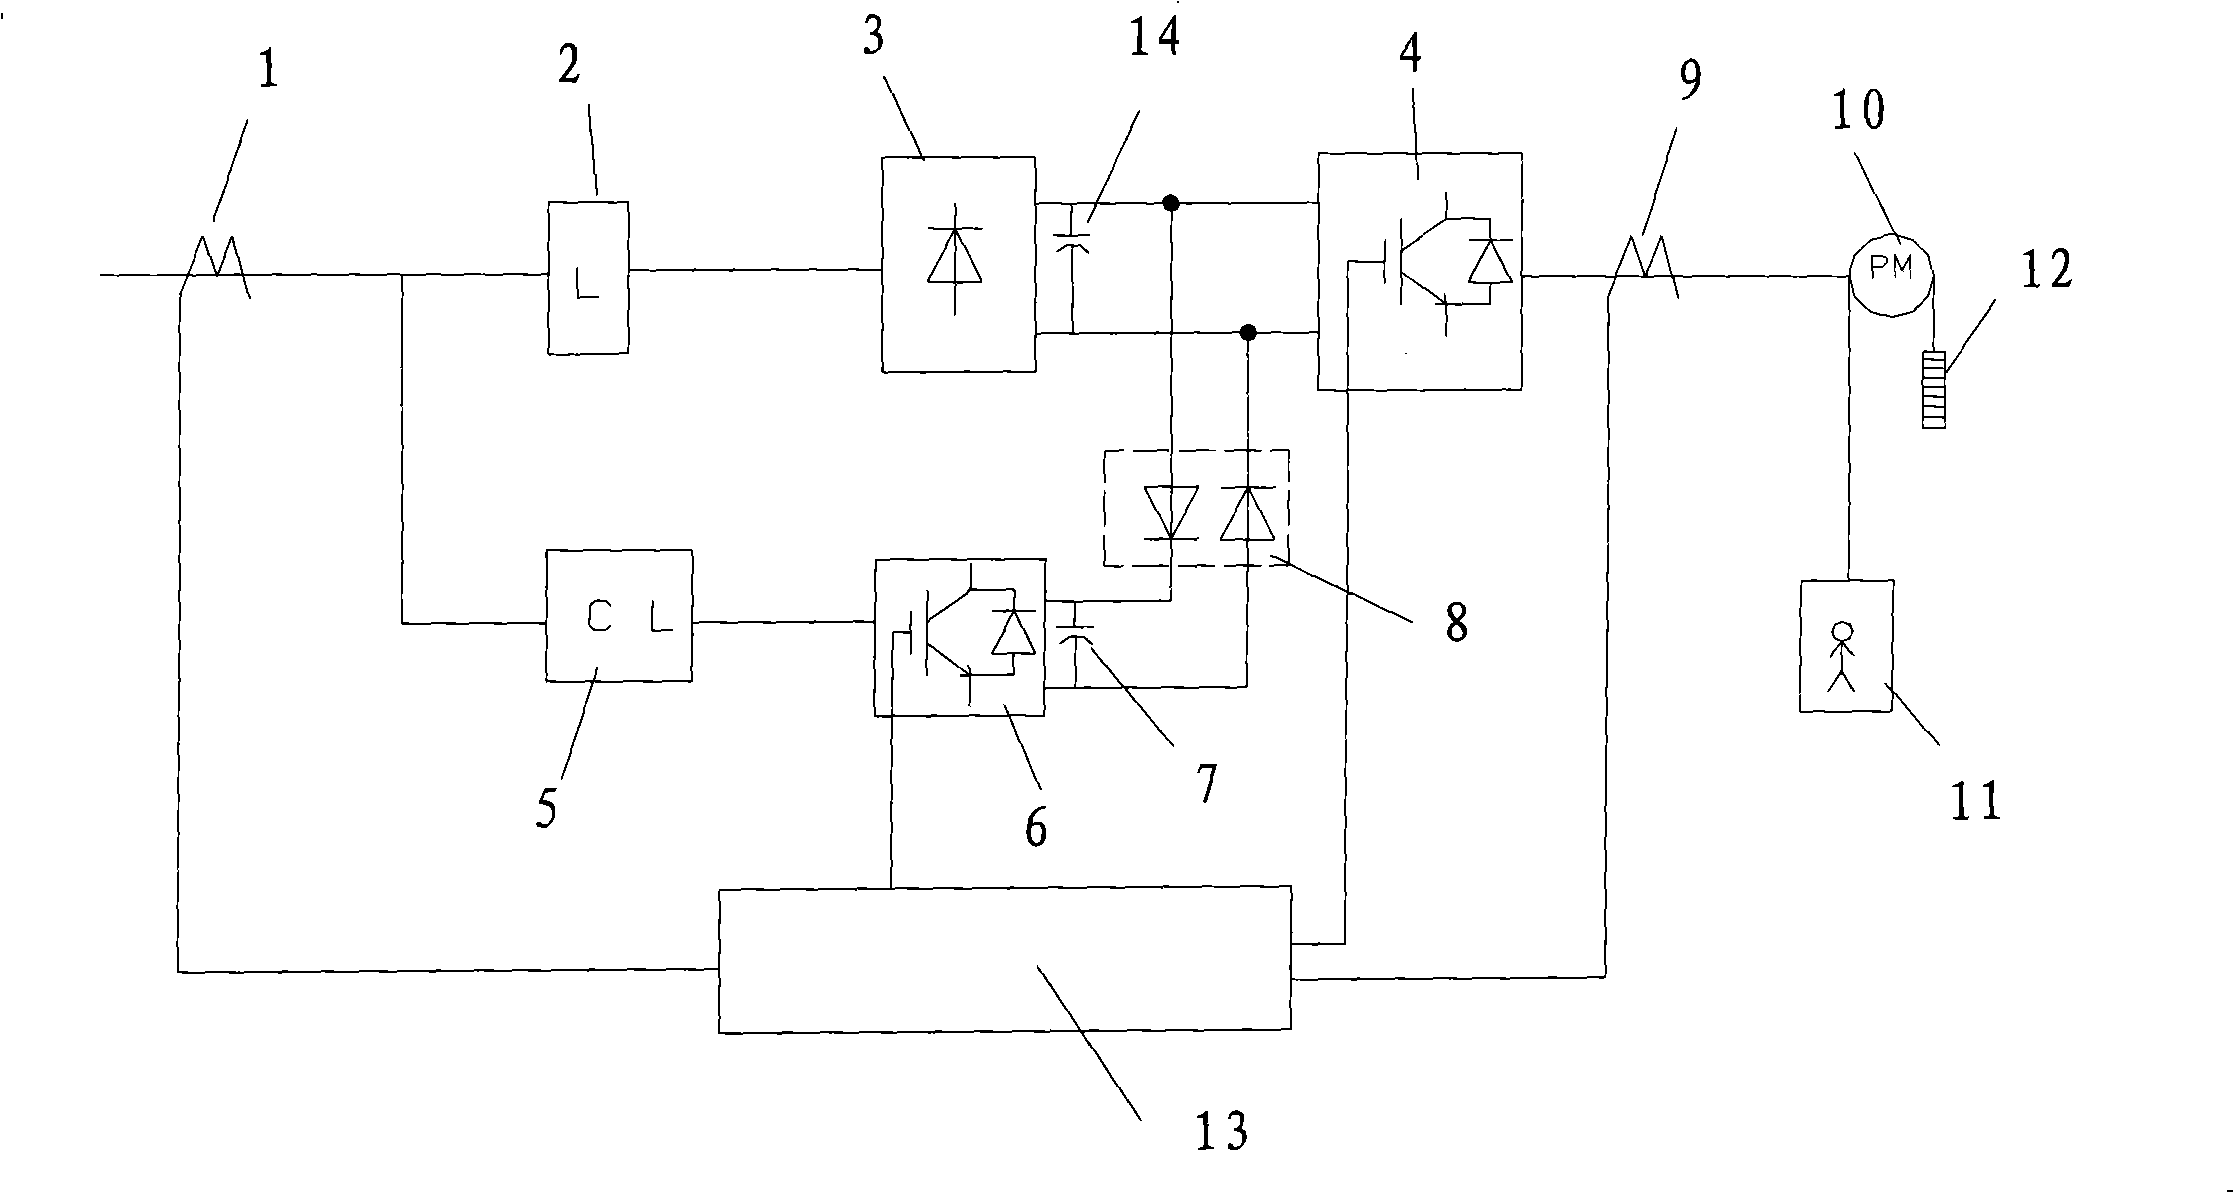 Parallel type energy feedback elevator system